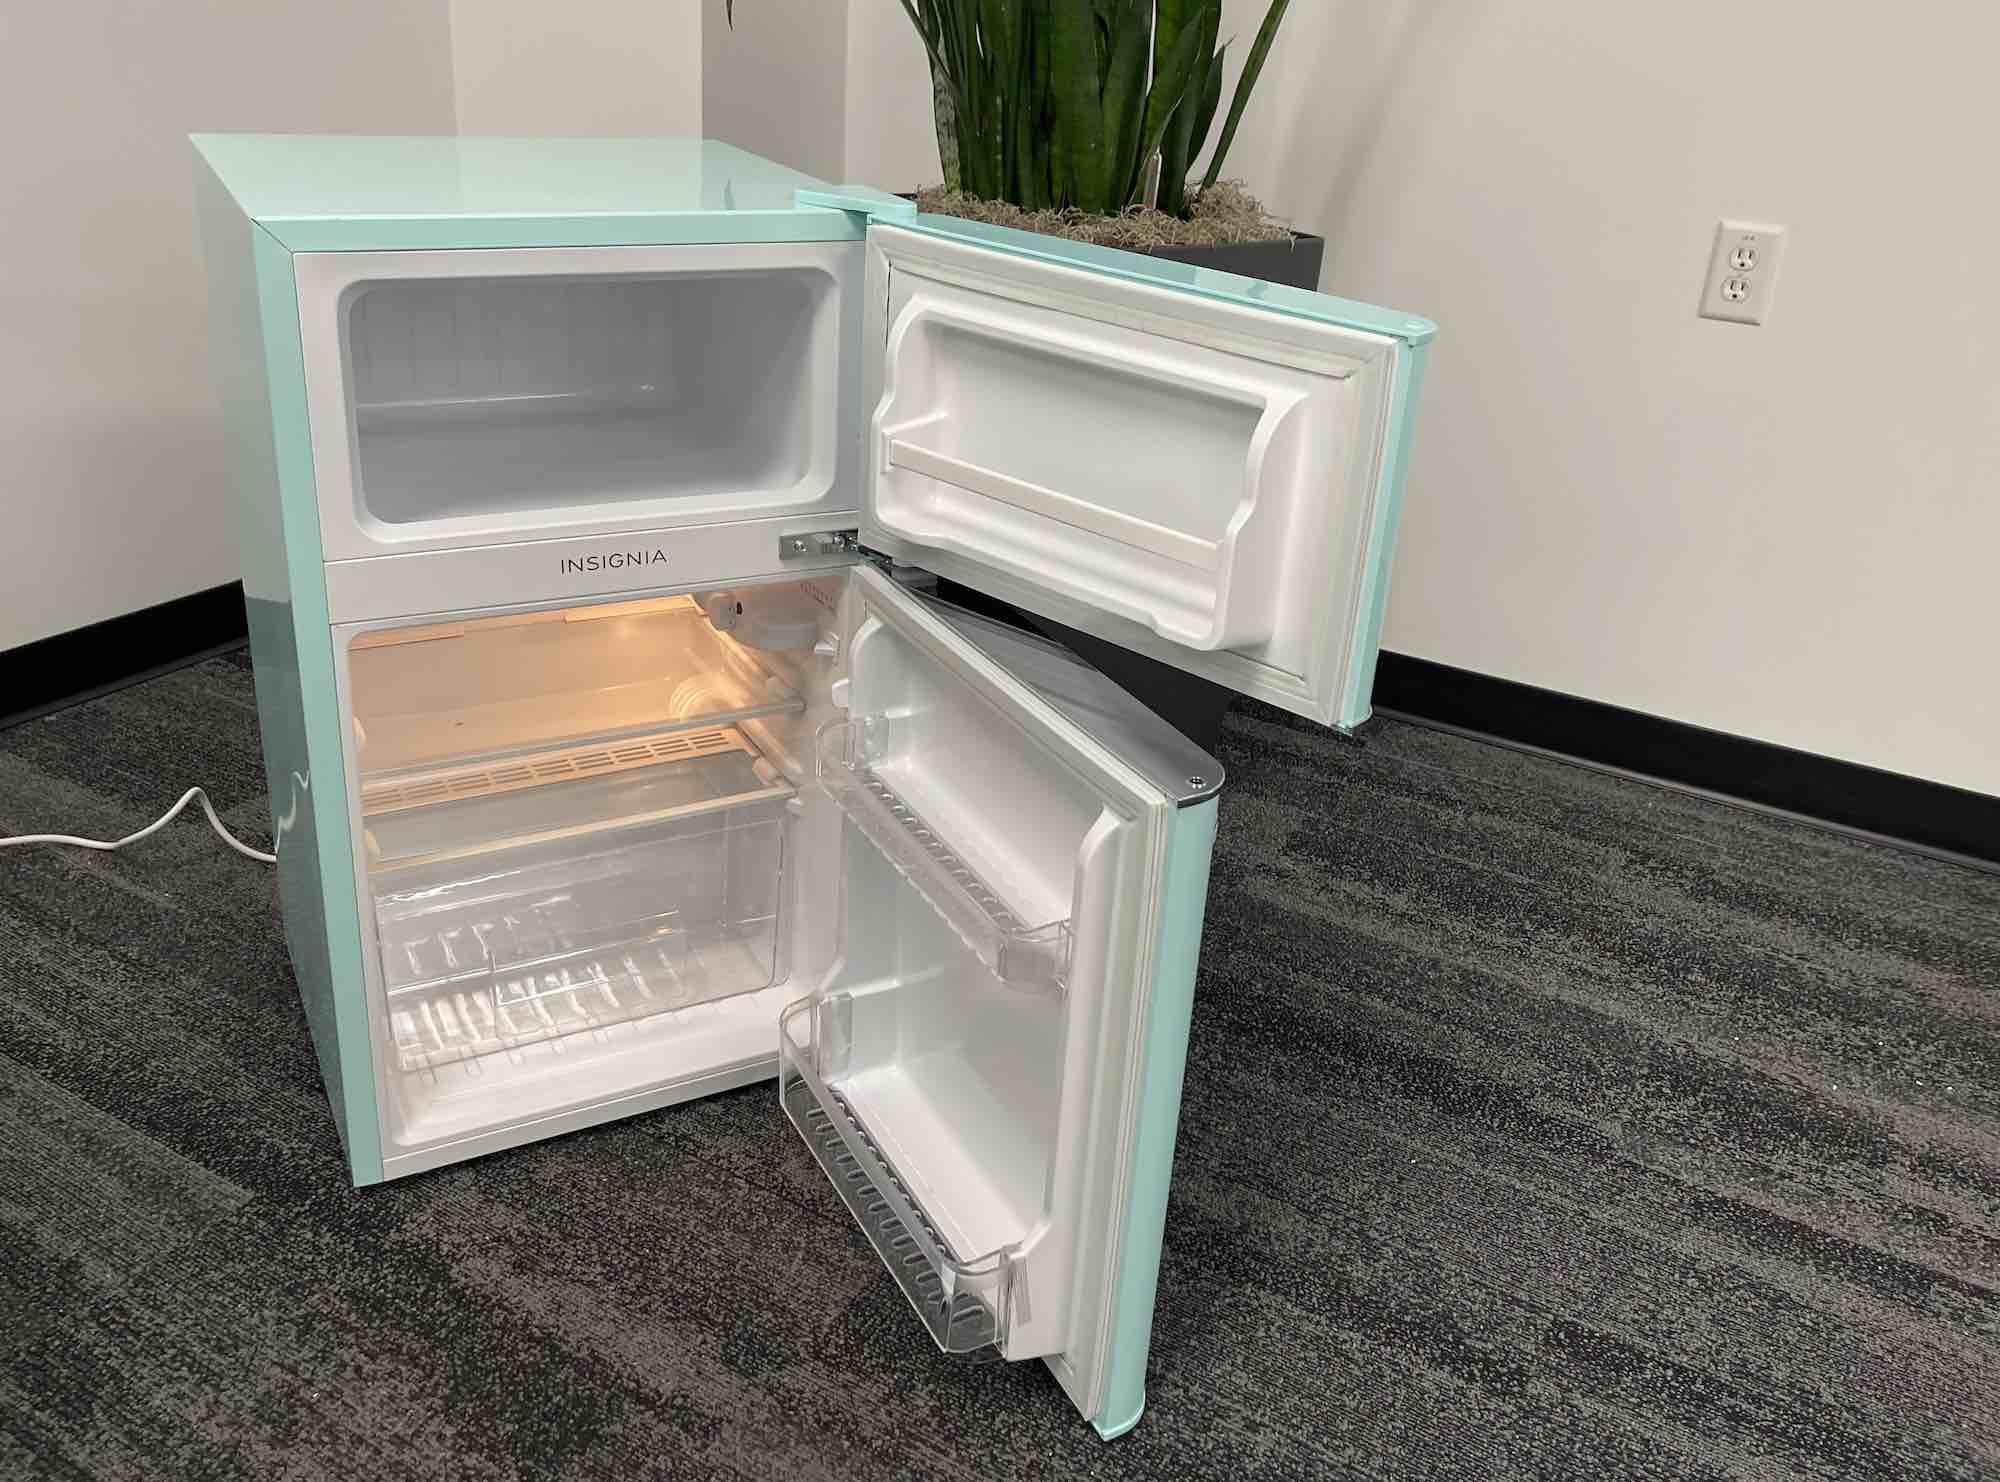 Insignia retro fridge with top freezer